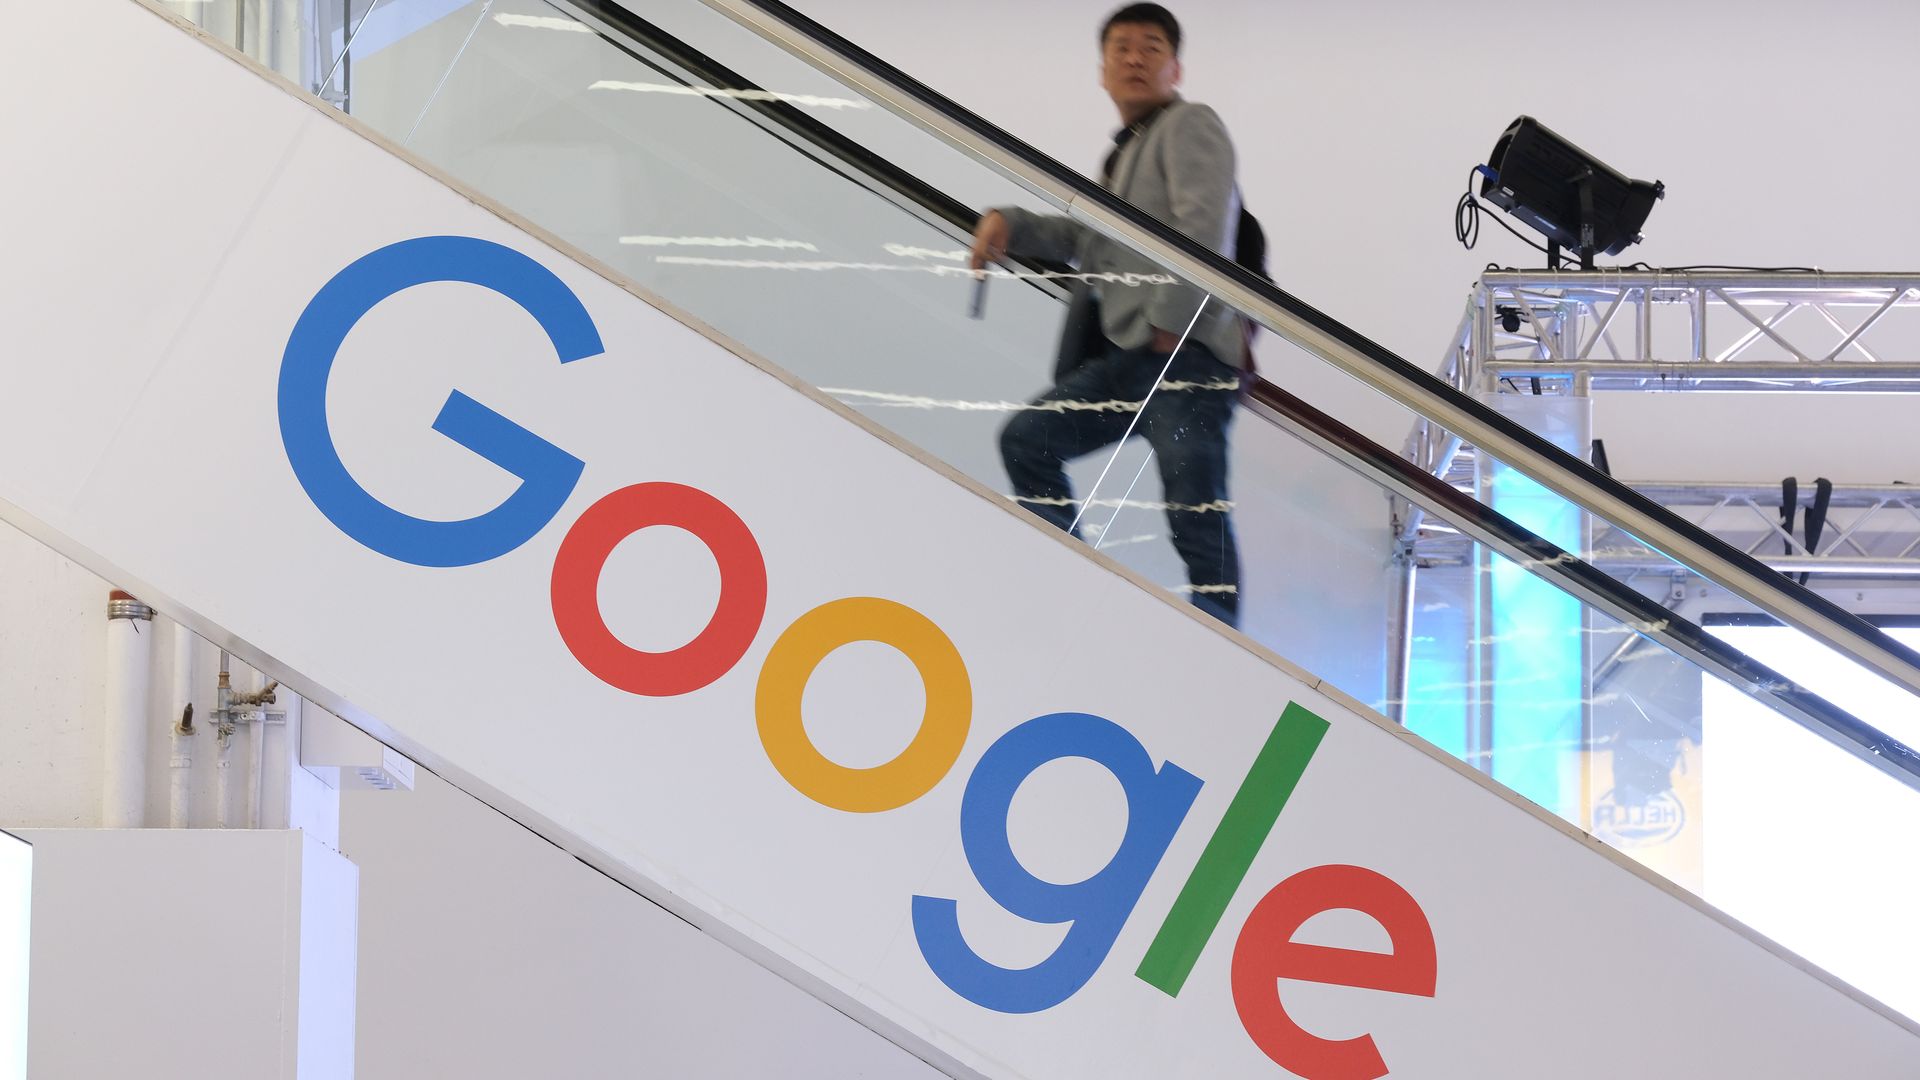 Google's logo on an escalator